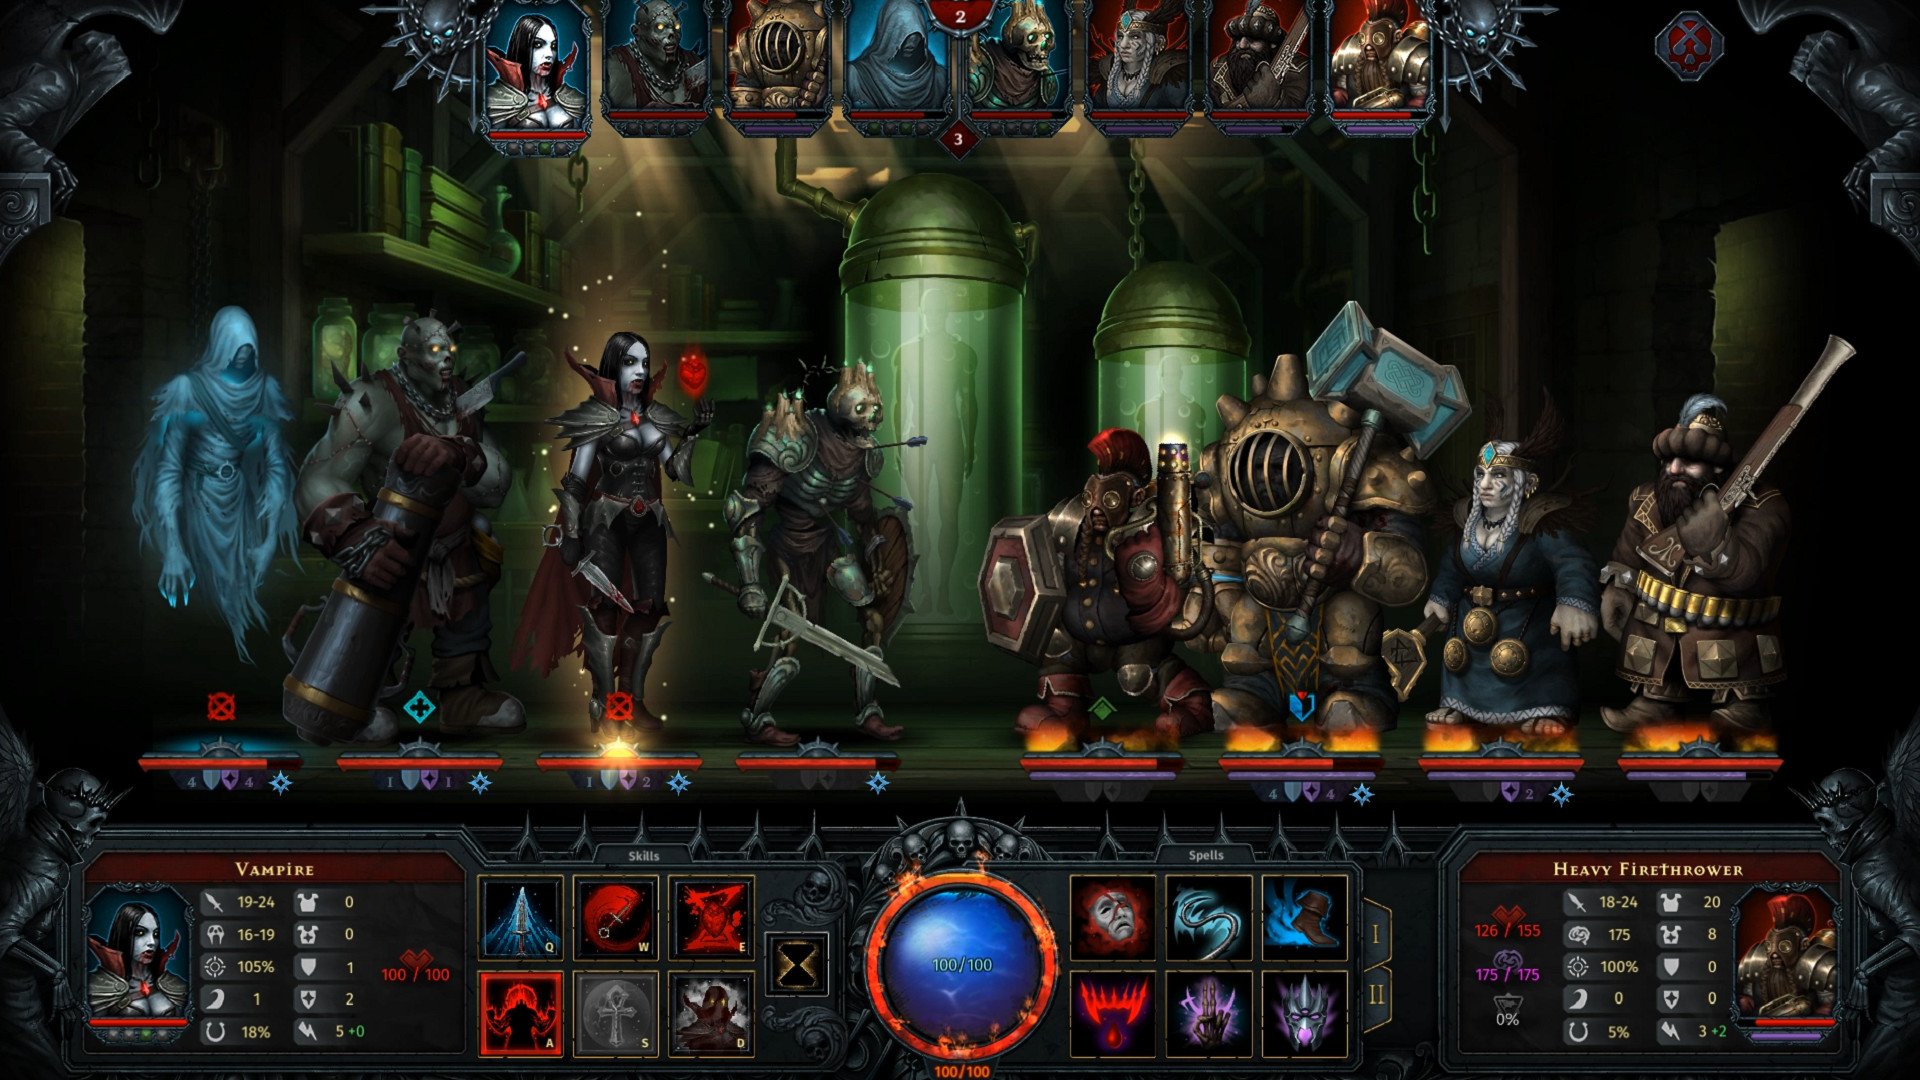 Скриншот 1 к игре Iratus Necromancer Edition (2019) PC | Лицензия